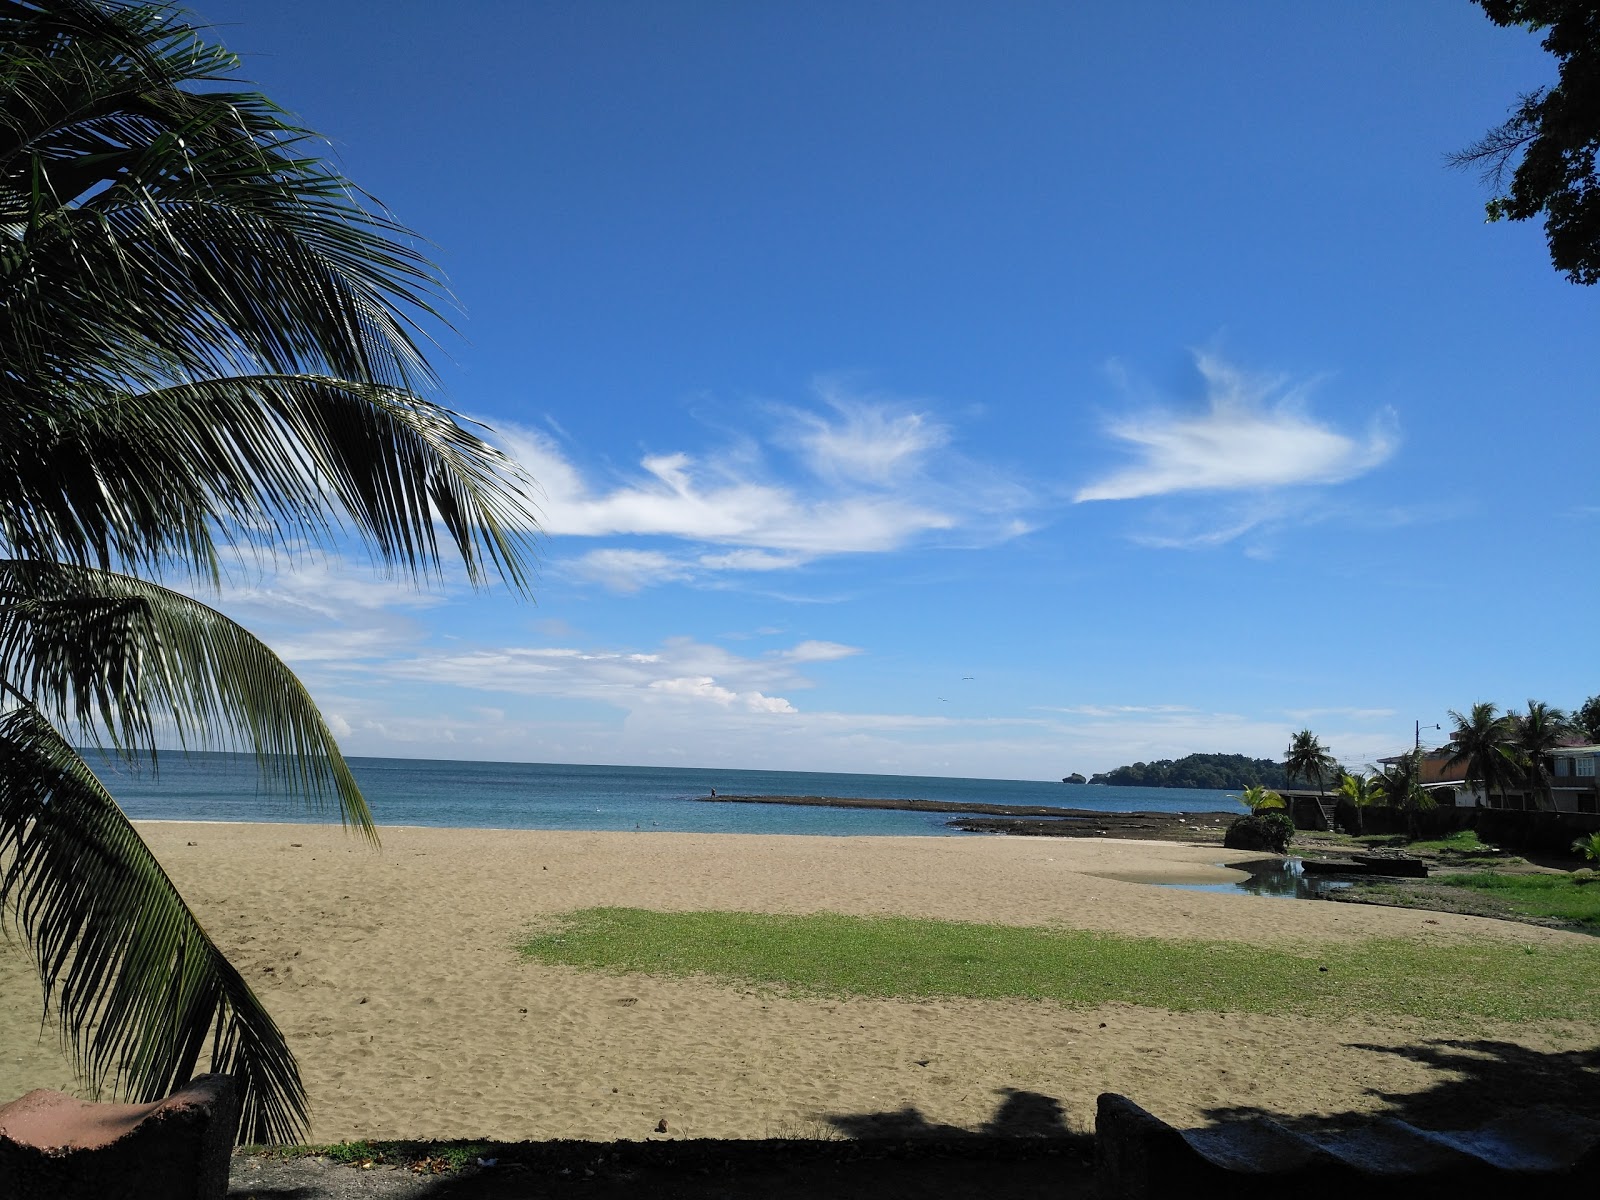 Foto af Playa Los Banos faciliteter område